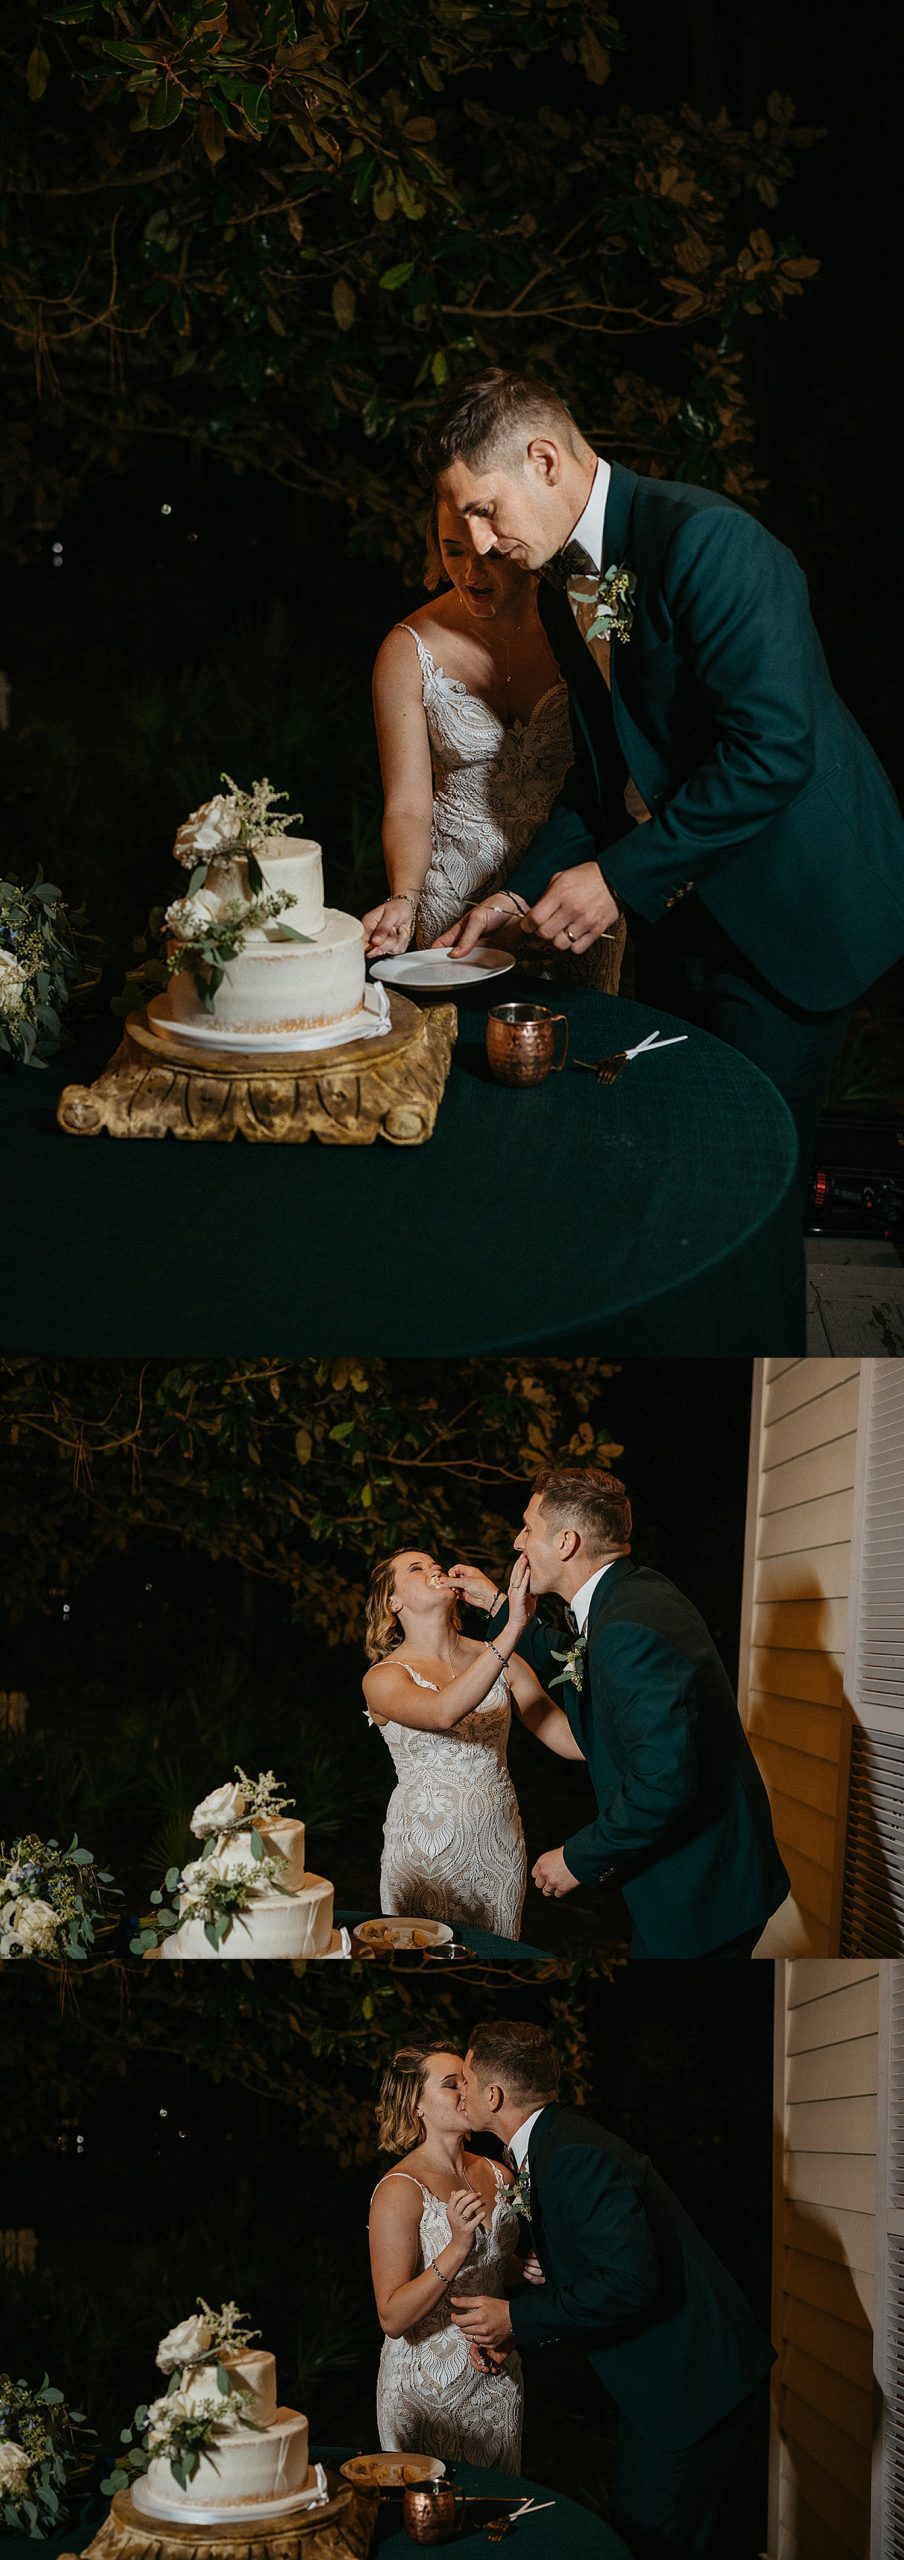 Newly married couple cut wedding cake at wedding reception of Carillon beach wedding